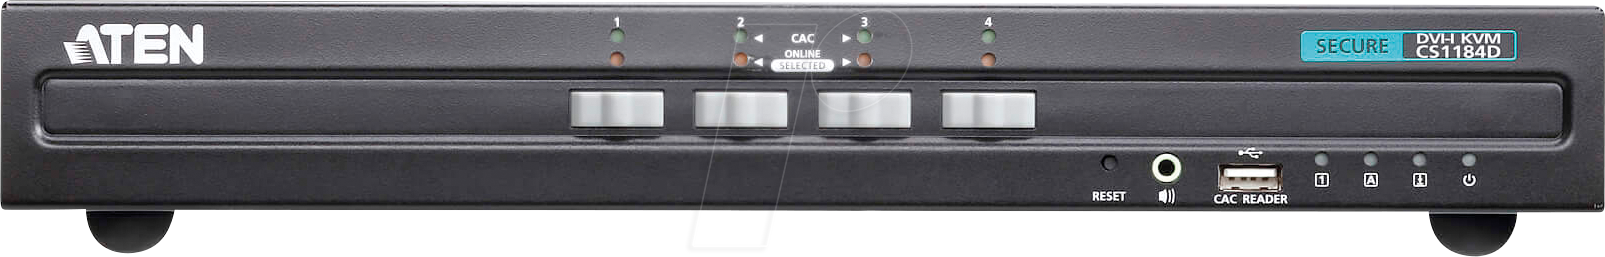 ATEN CS1184D - 4-Port Sicherheits KVM Switch, DVI, USB, PS/2, Audio von Aten